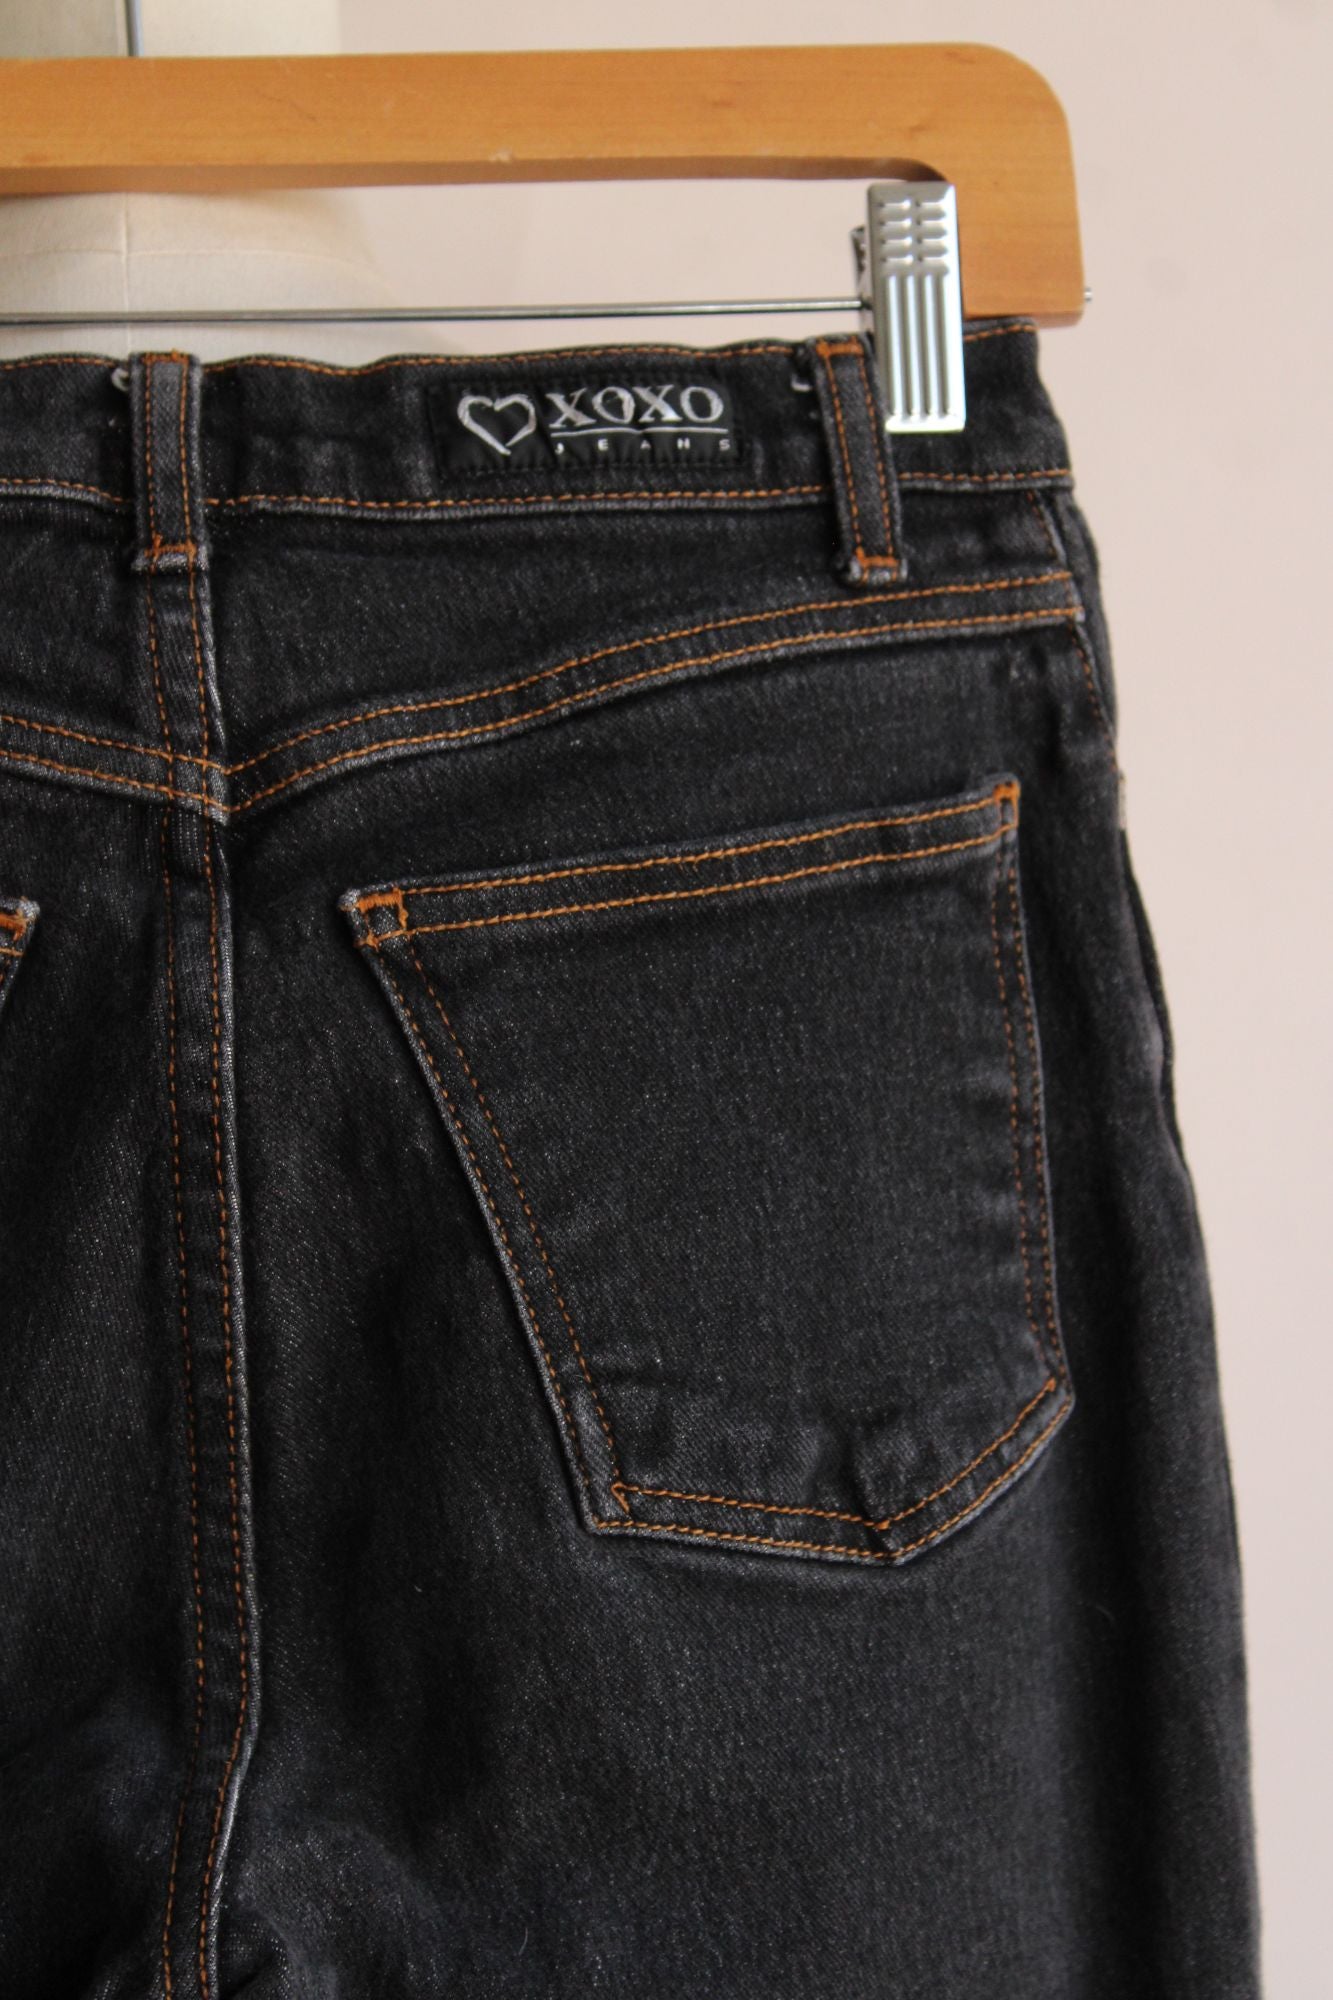 XOXO Jeans, Black Wash, Size 7/8, Straight Leg